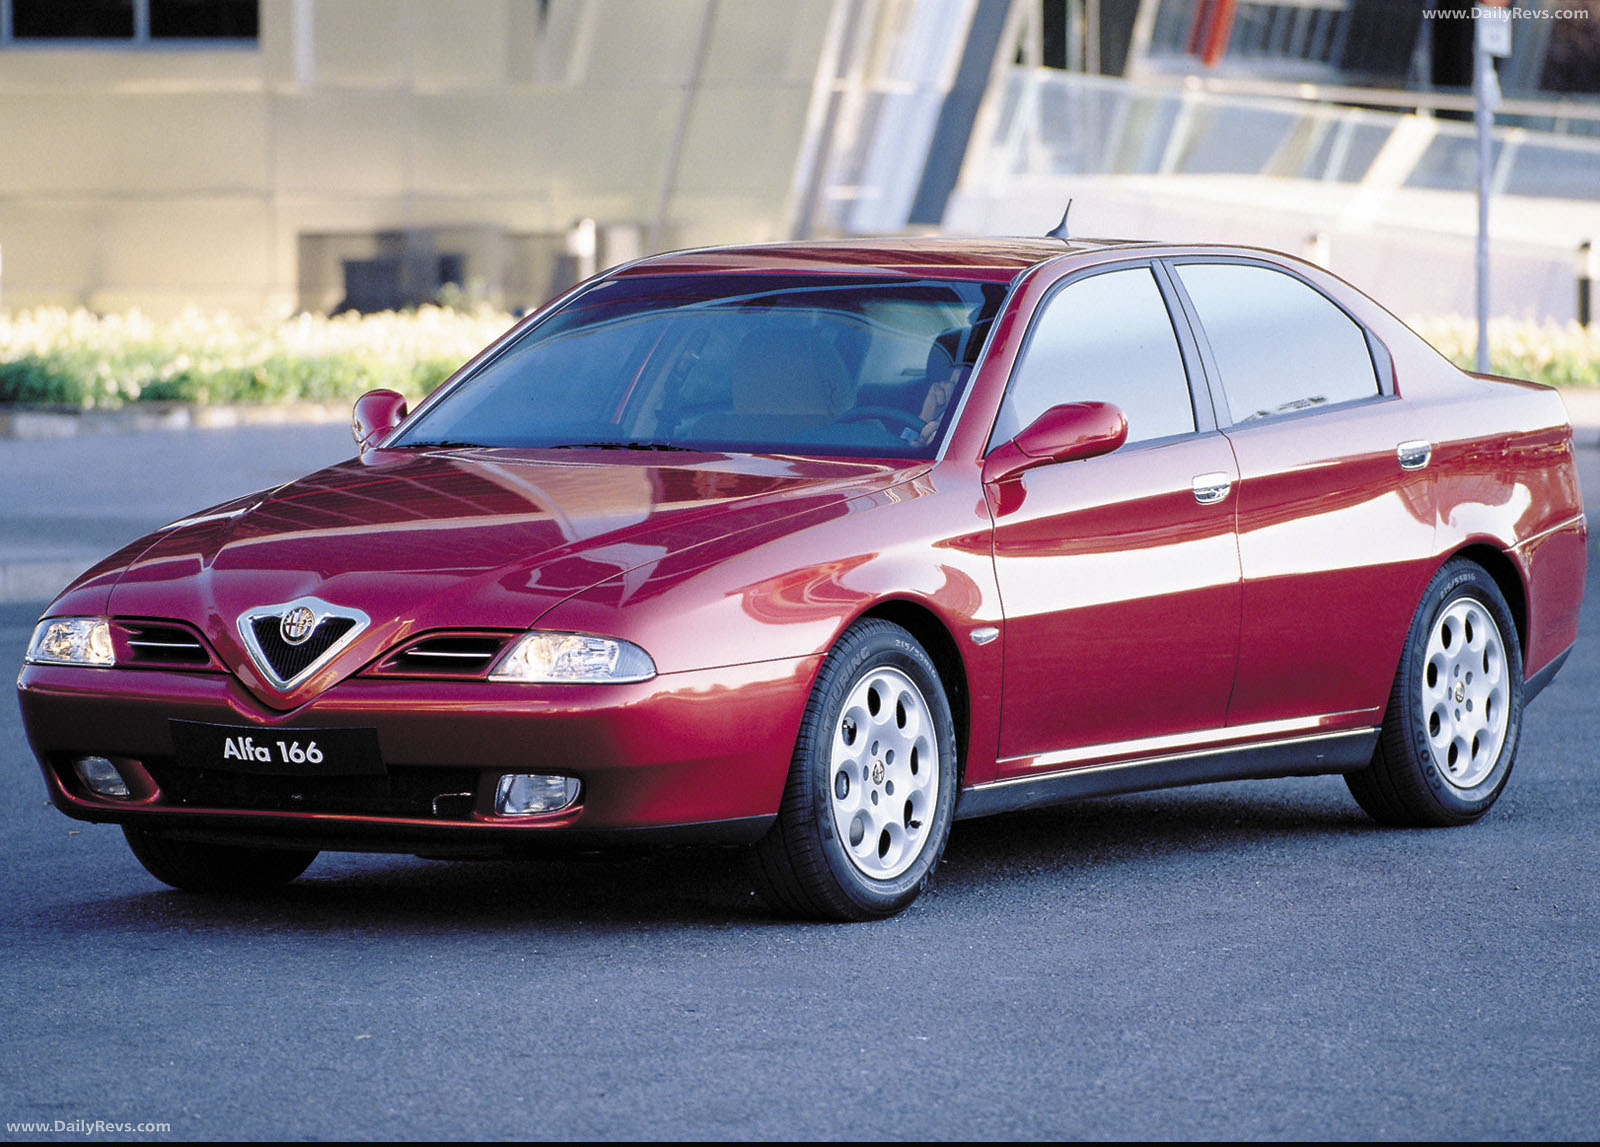 Alfa Romeo 166 1998 dailyrevs com 1998-Alfa-Romeo-166-40